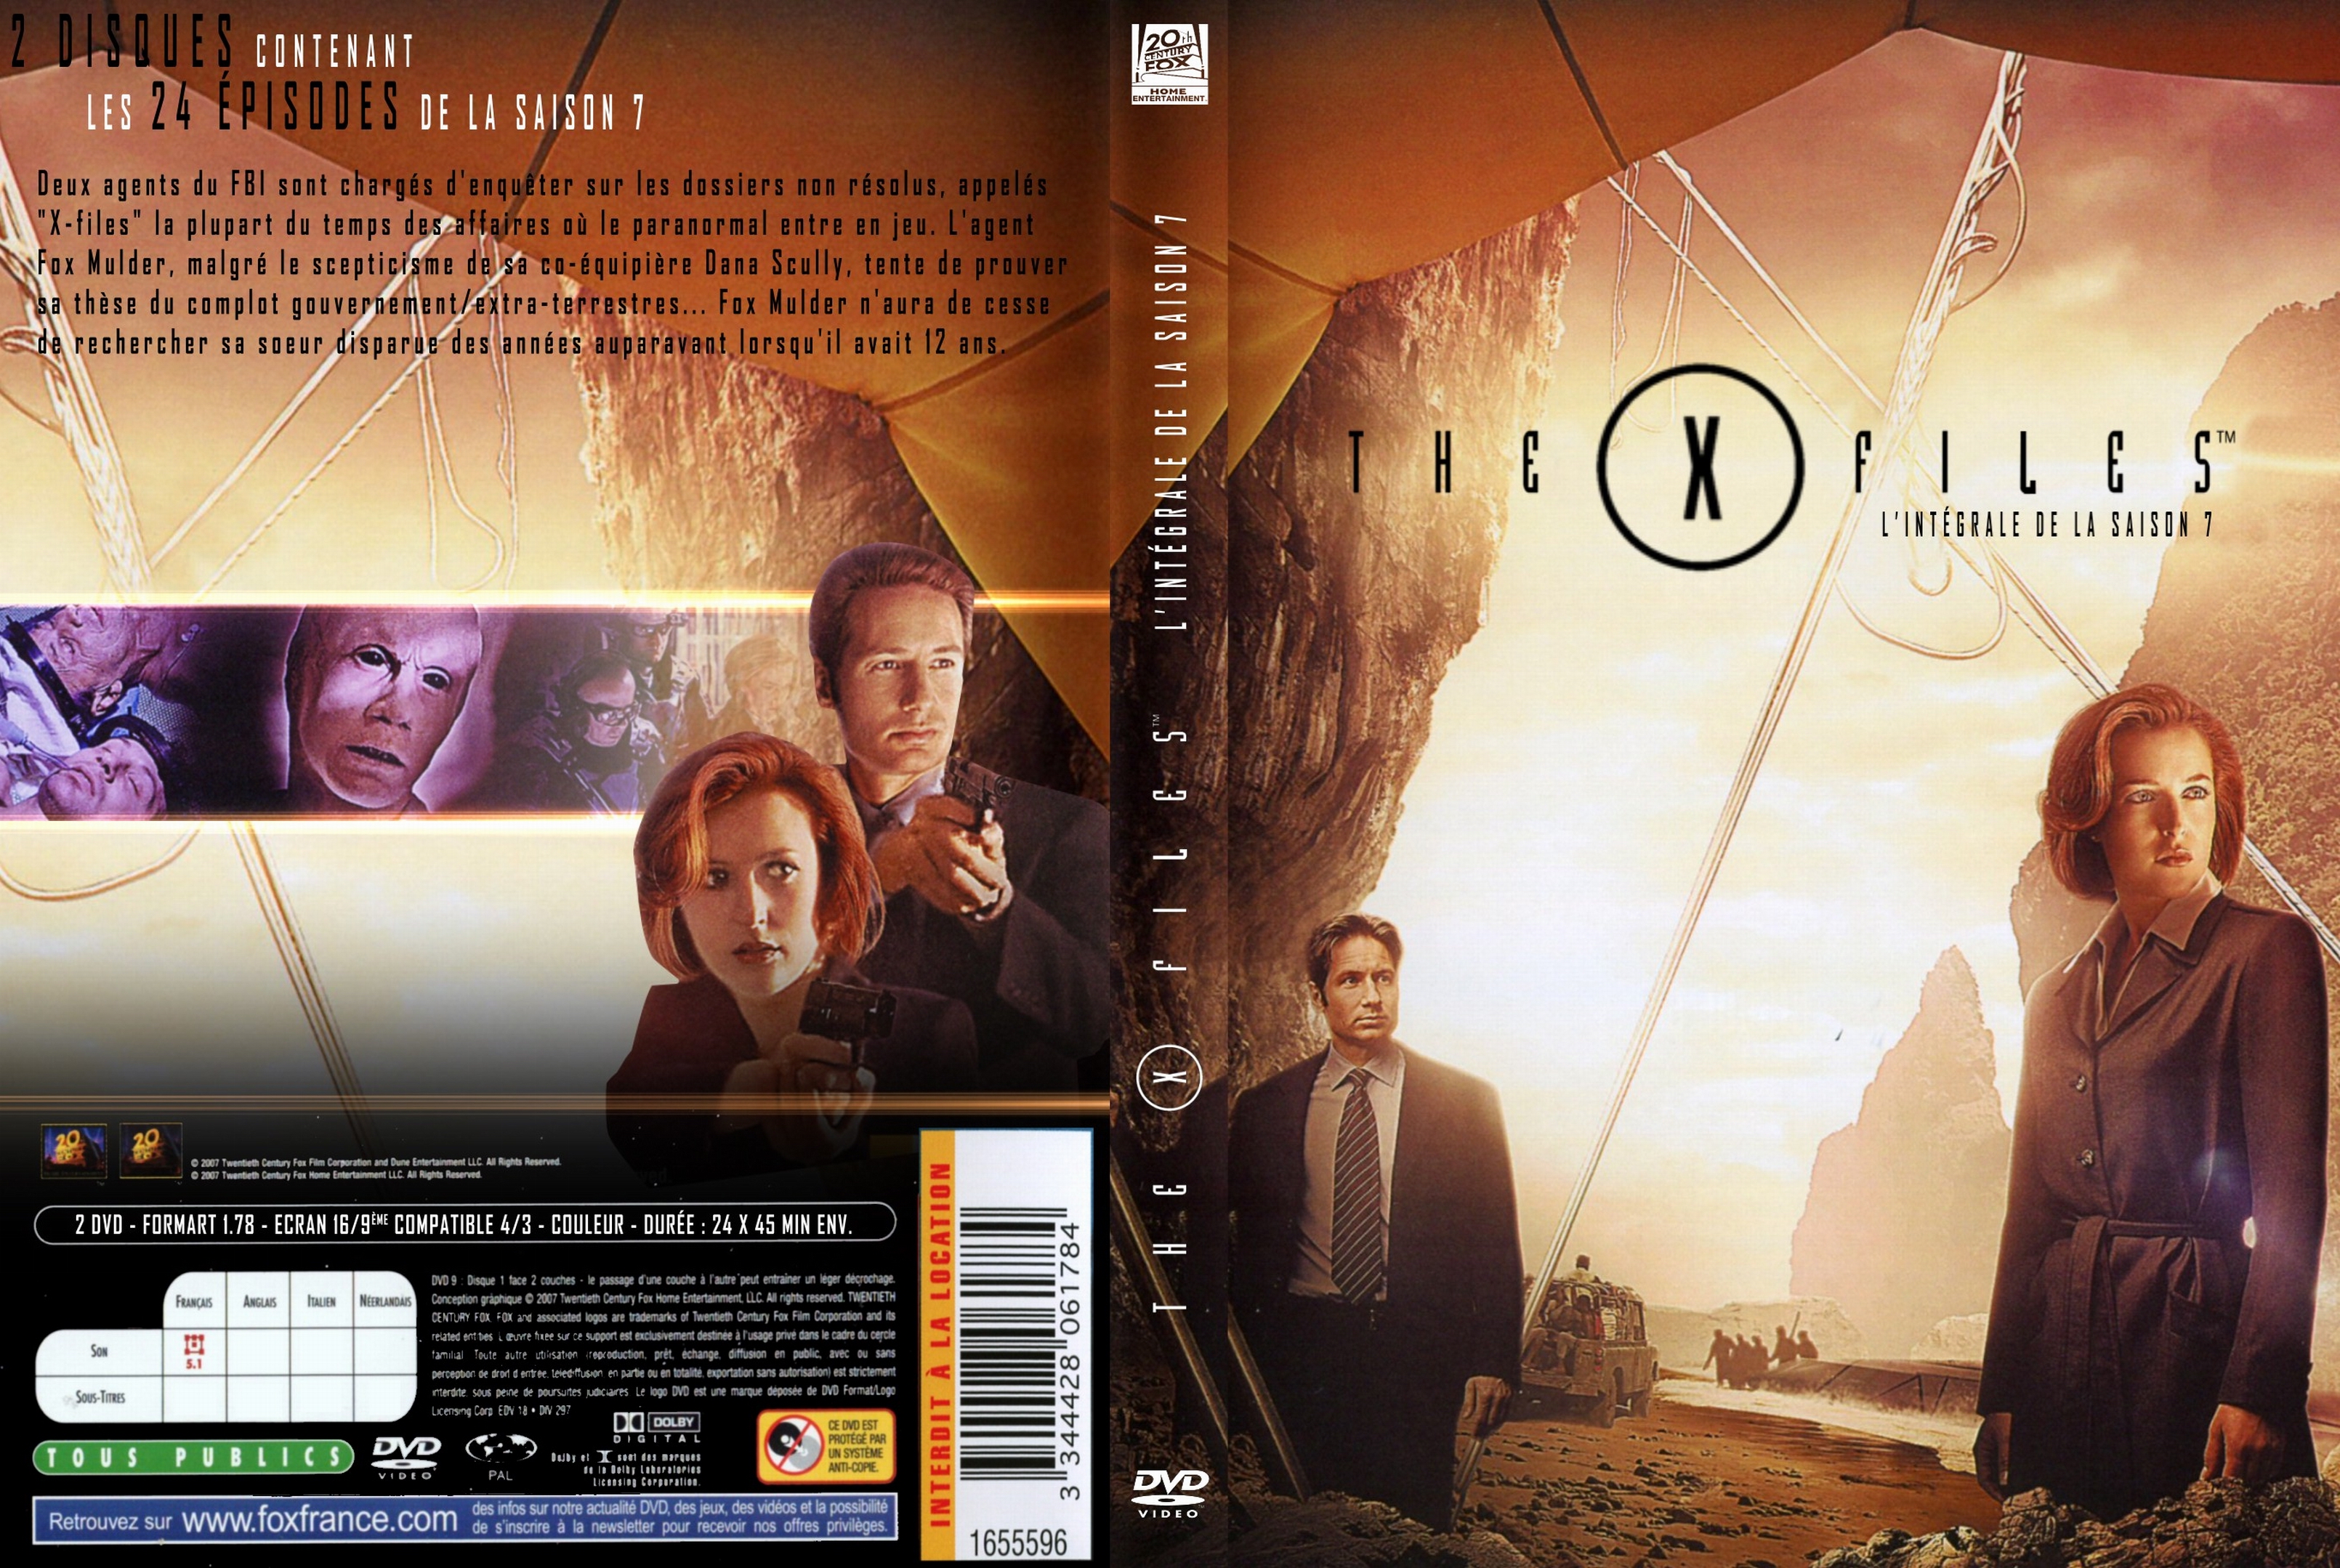 Jaquette DVD The X Files saison 7 custom